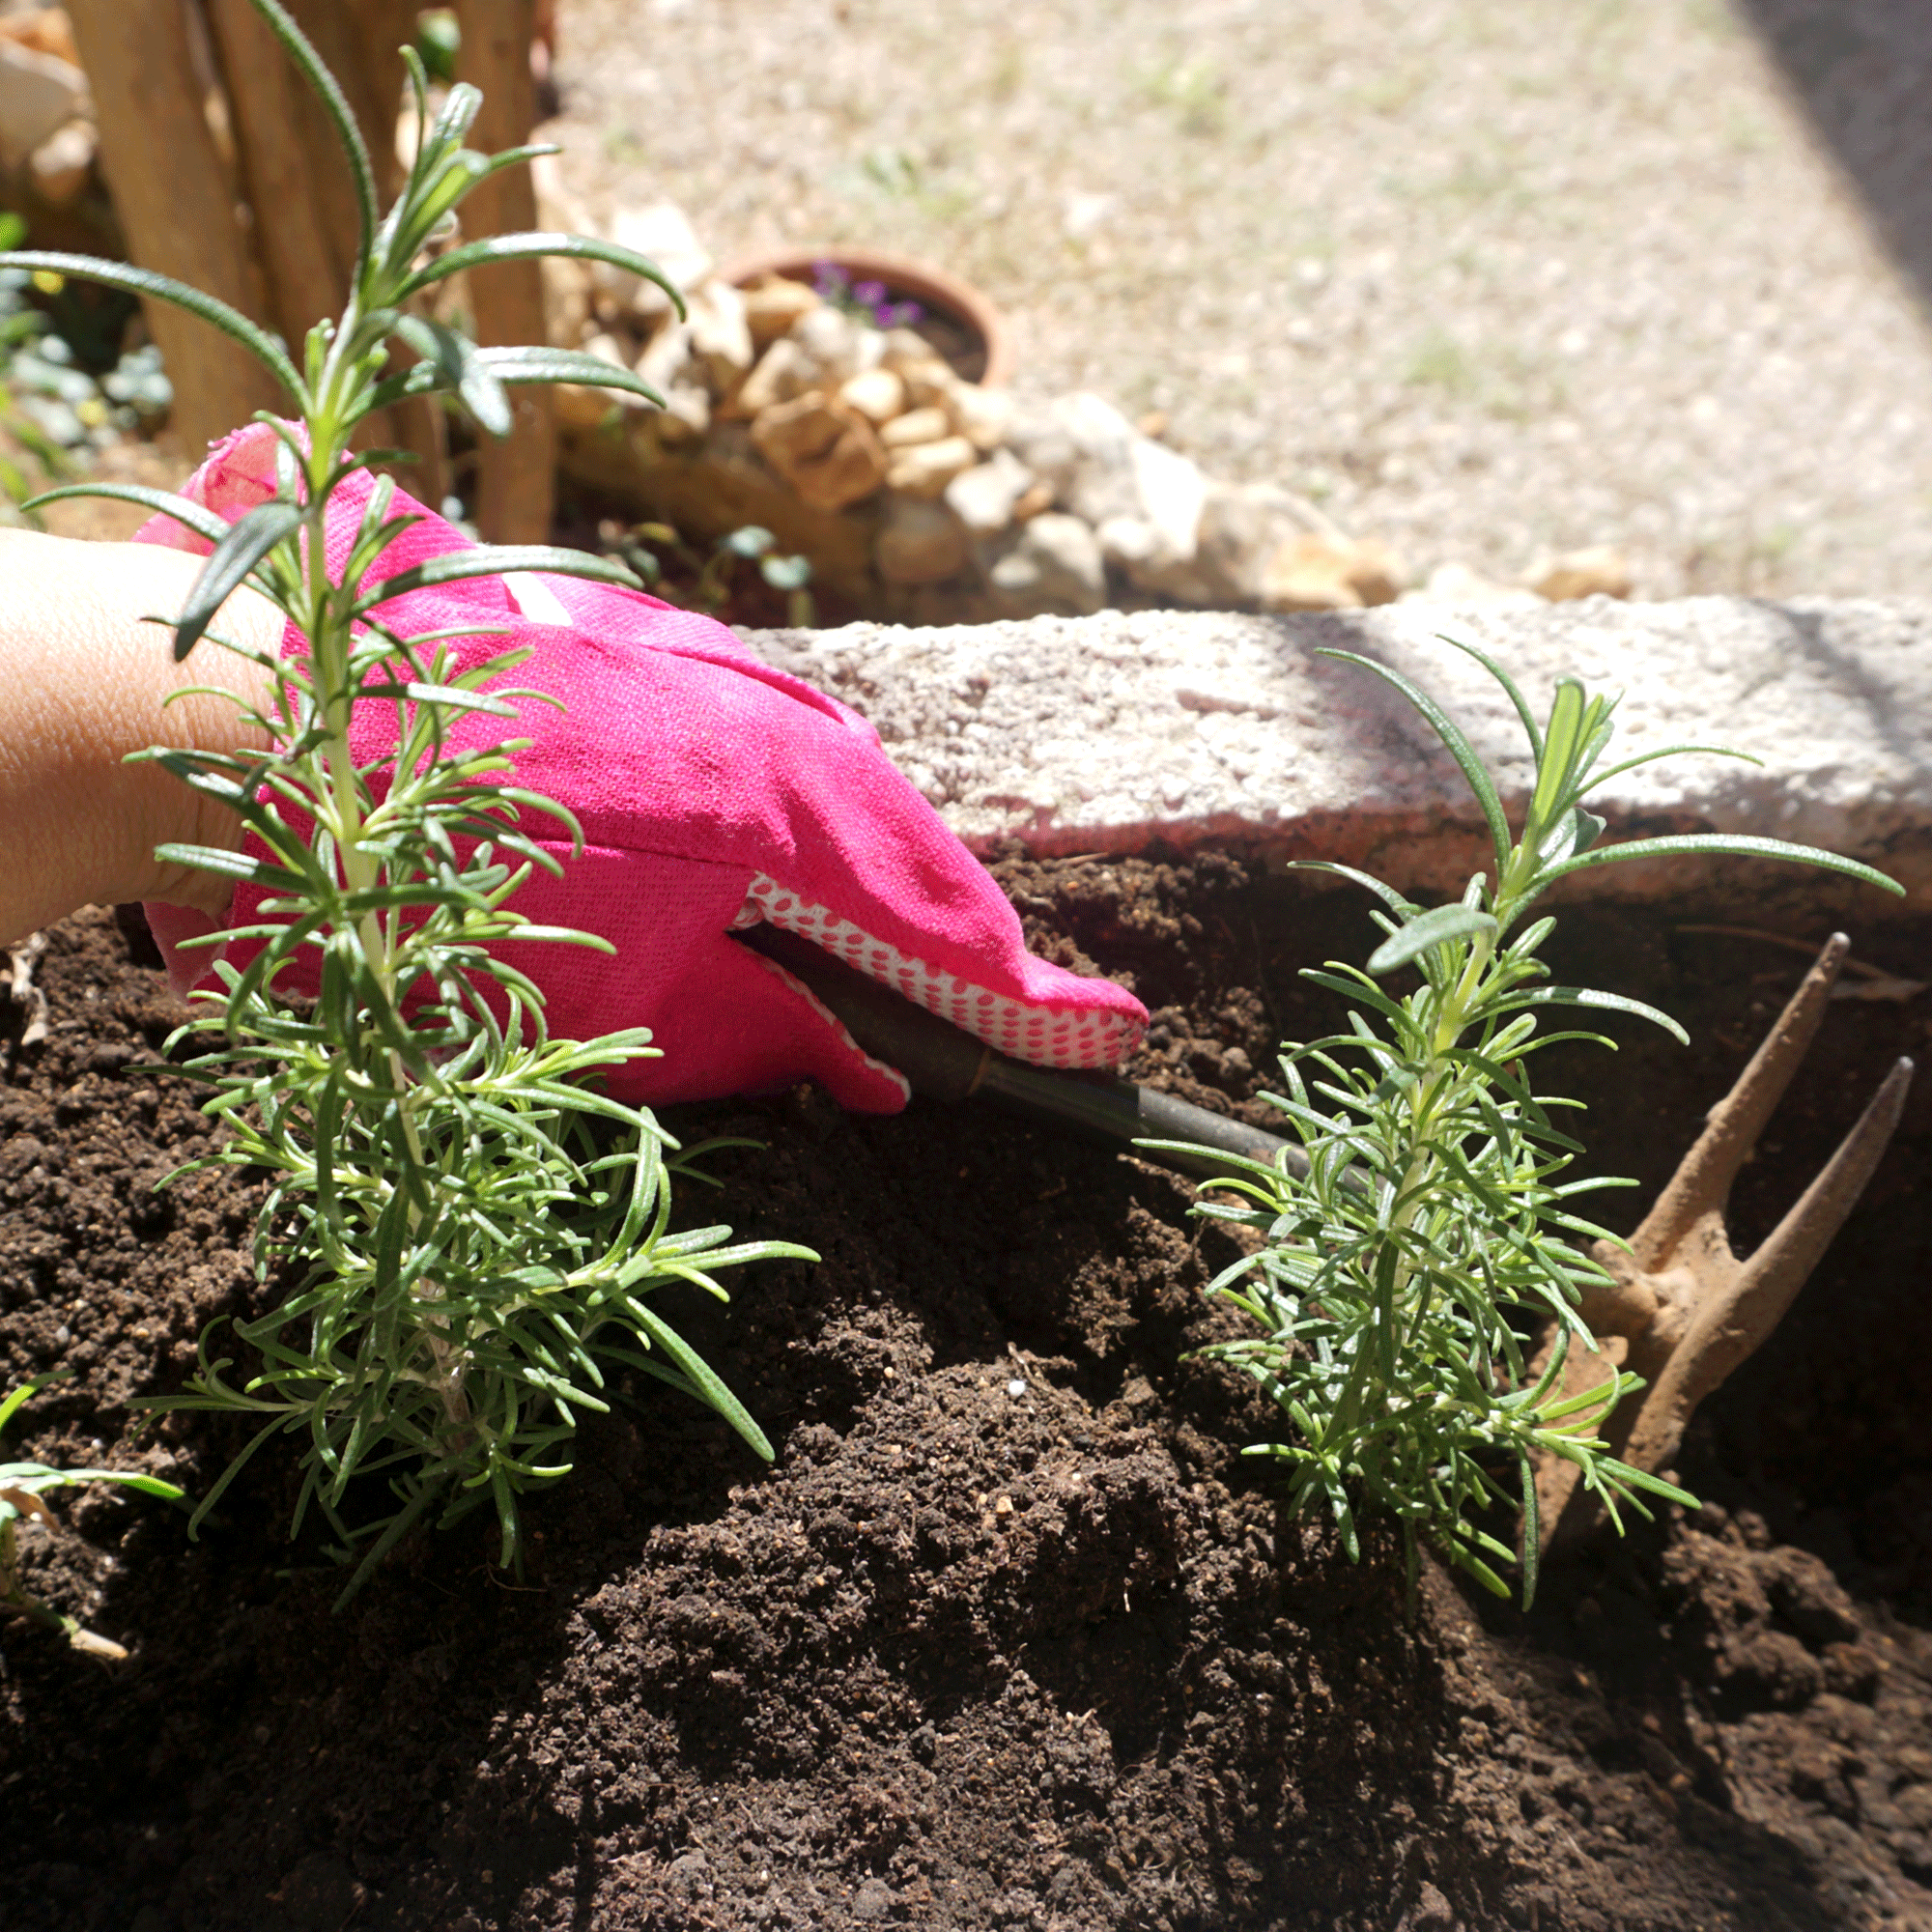 Rosemary plant in garden